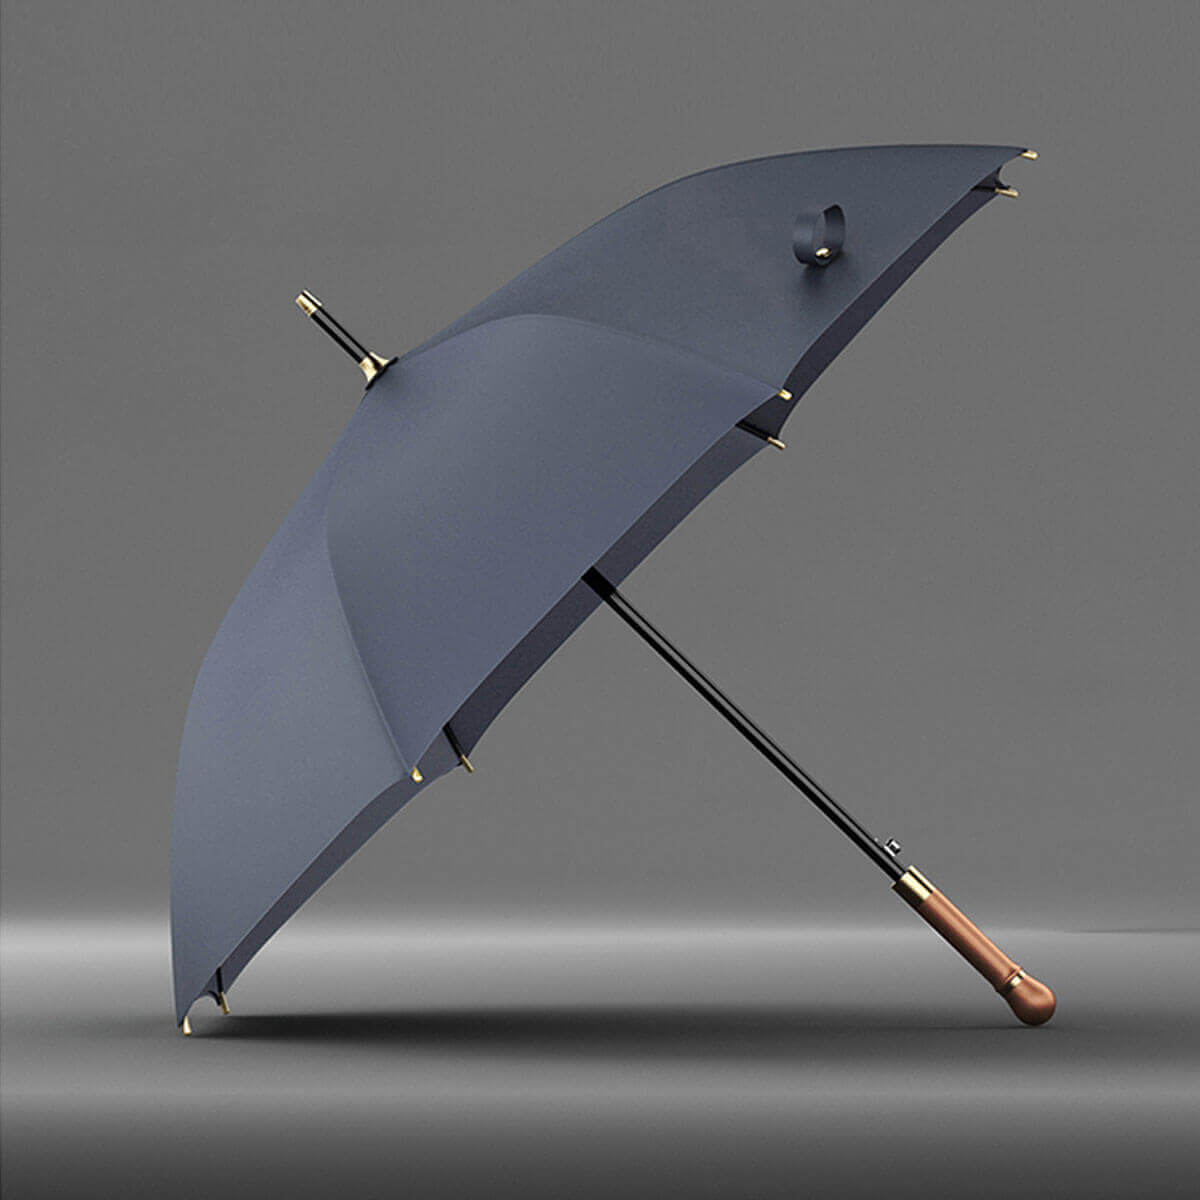 Elegant wooden handle umbrella for rainy days